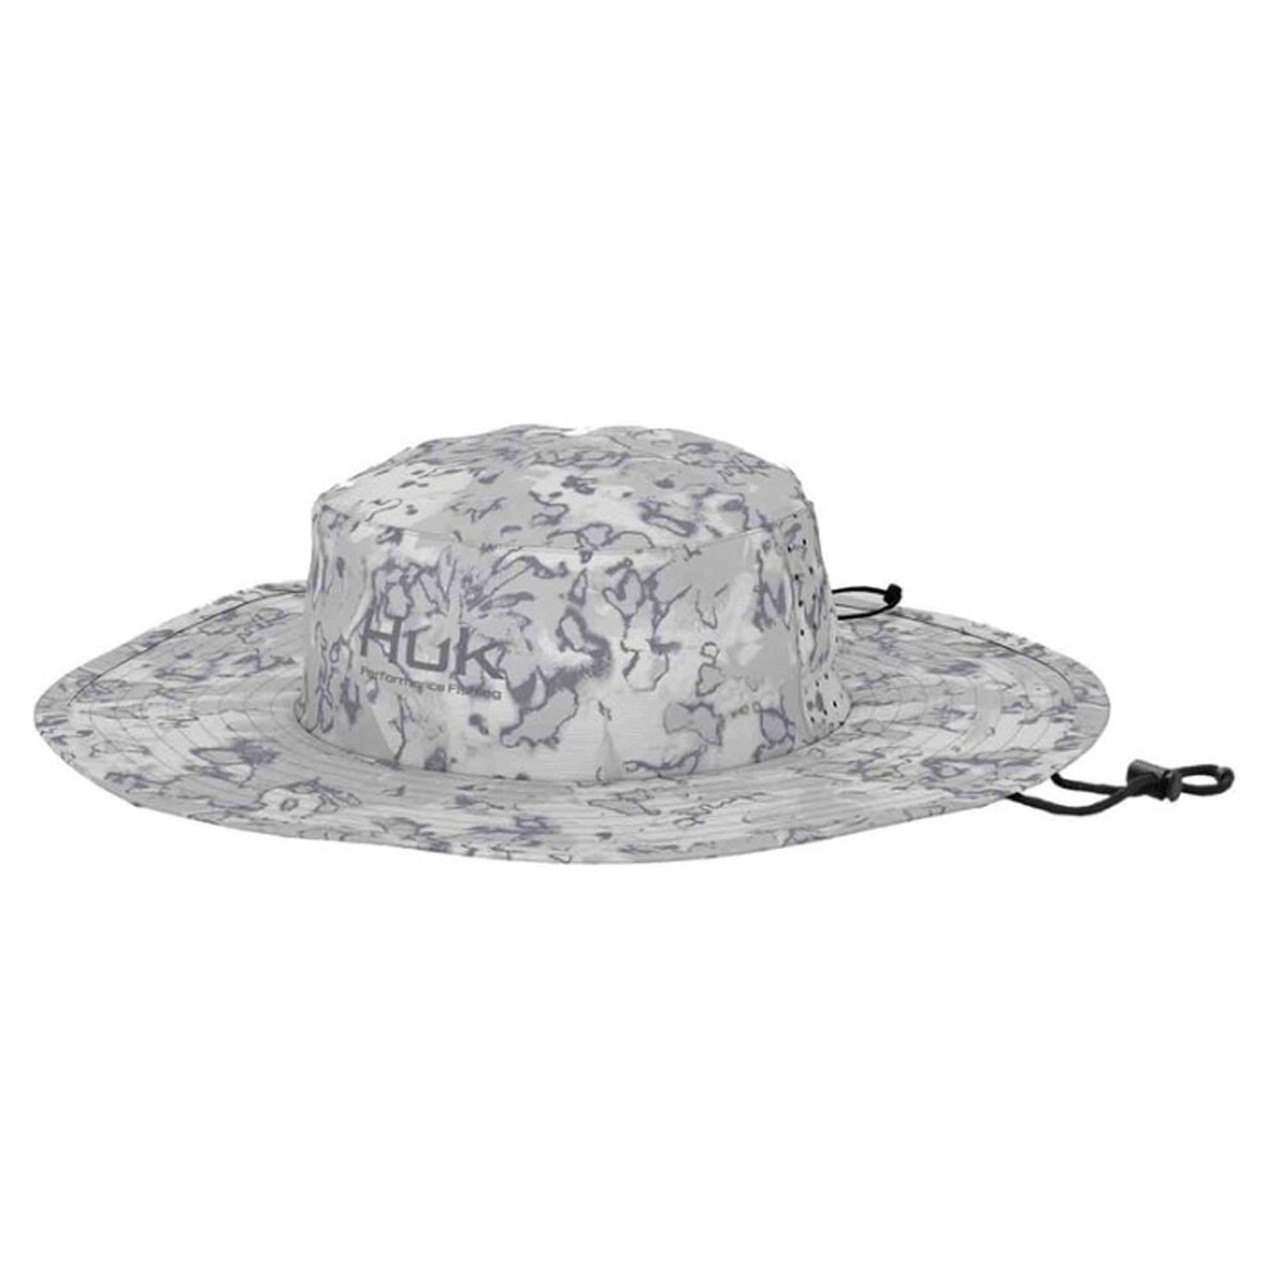 Men's Huk Boonie Fin Flats Hat